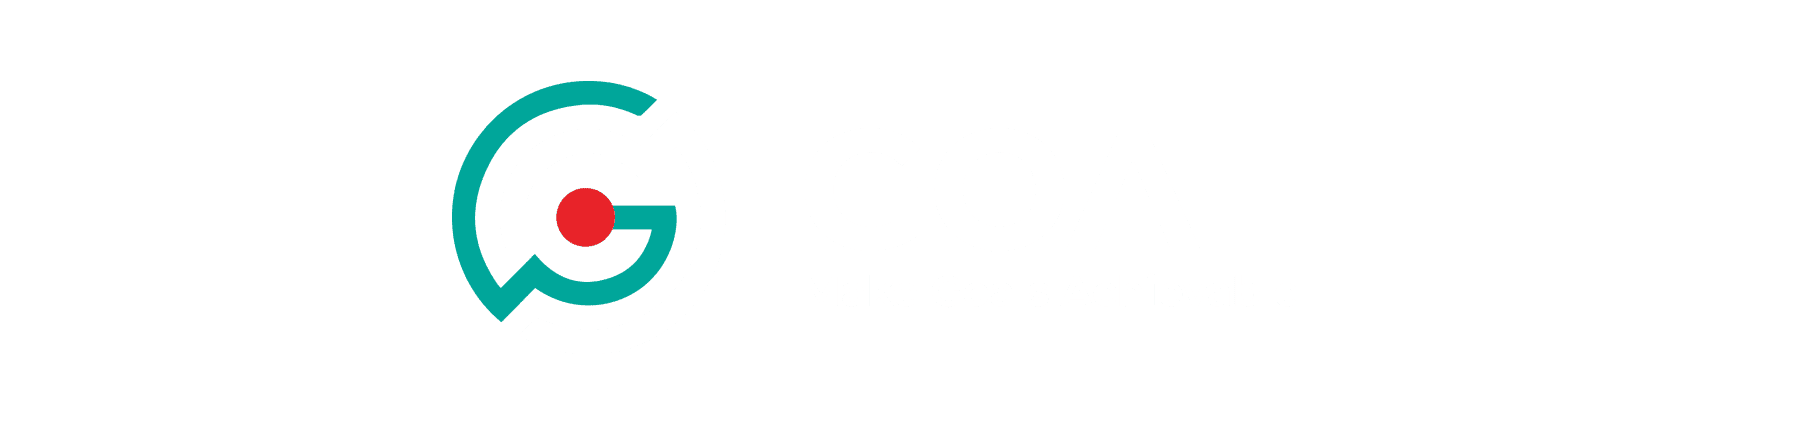 Transform Goal